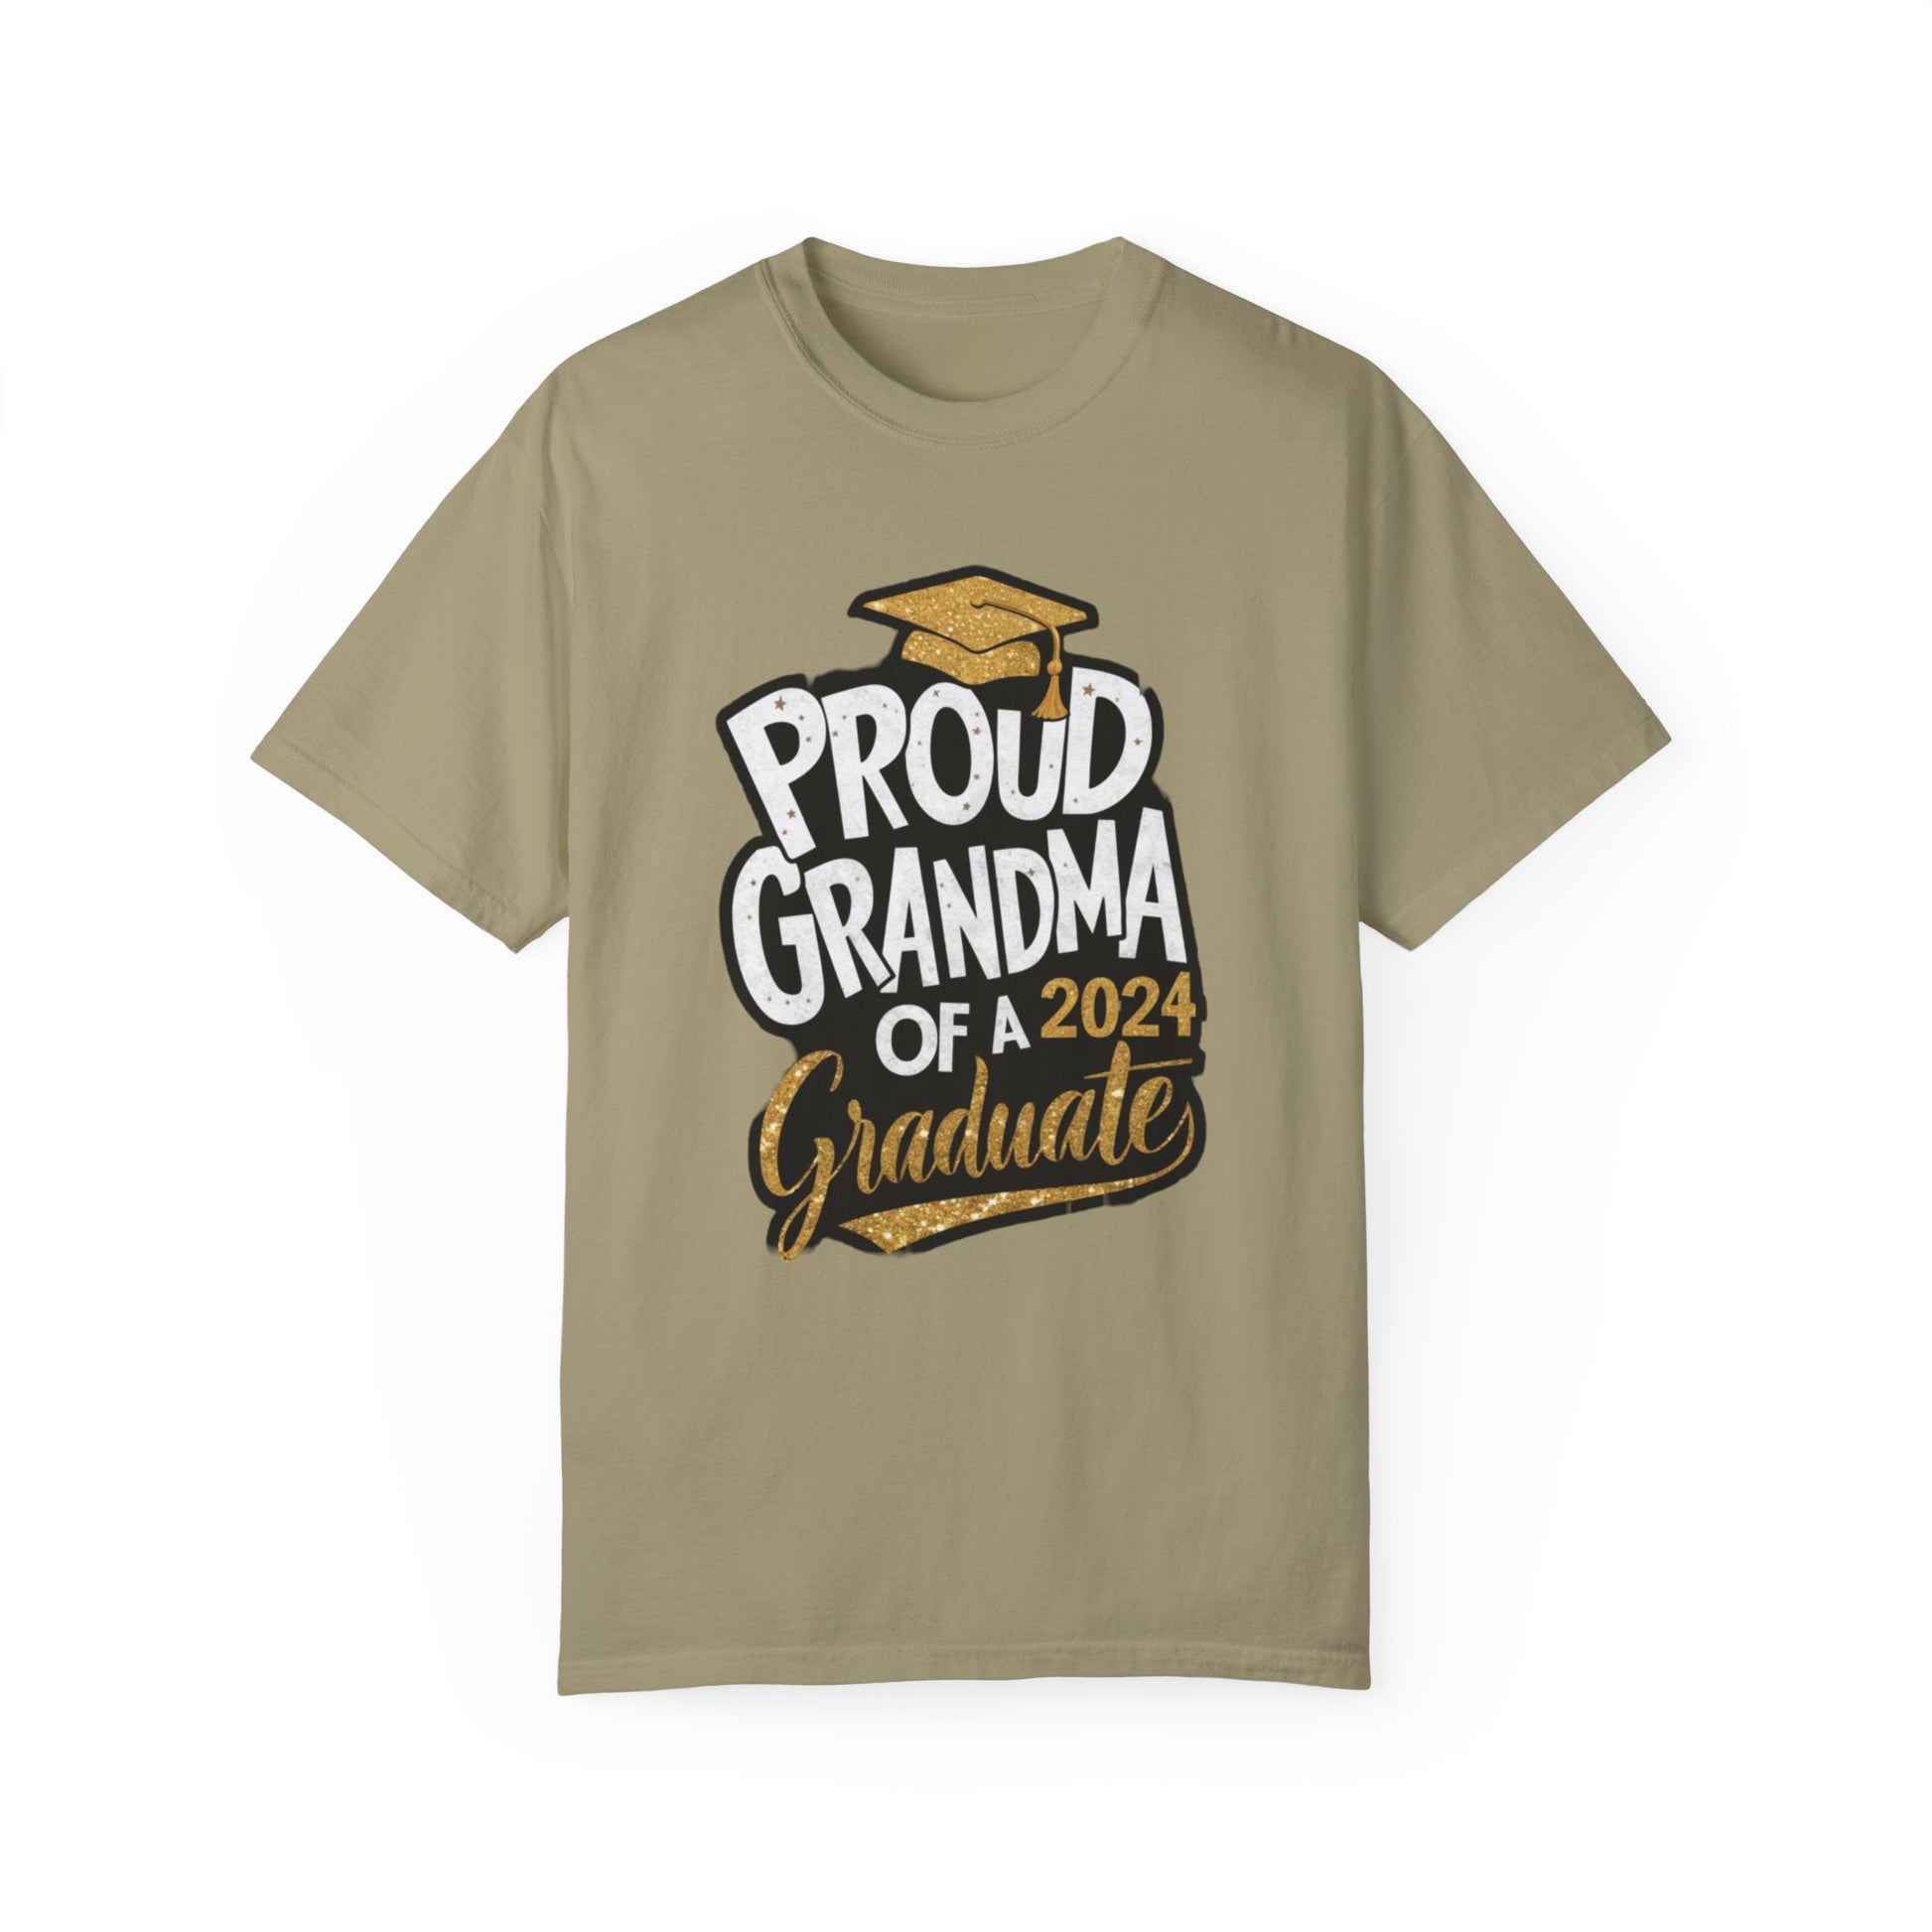 Proud of Grandma 2024 Graduate Unisex Garment-dyed T-shirt Cotton Funny Humorous Graphic Soft Premium Unisex Men Women Khaki T-shirt Birthday Gift-11